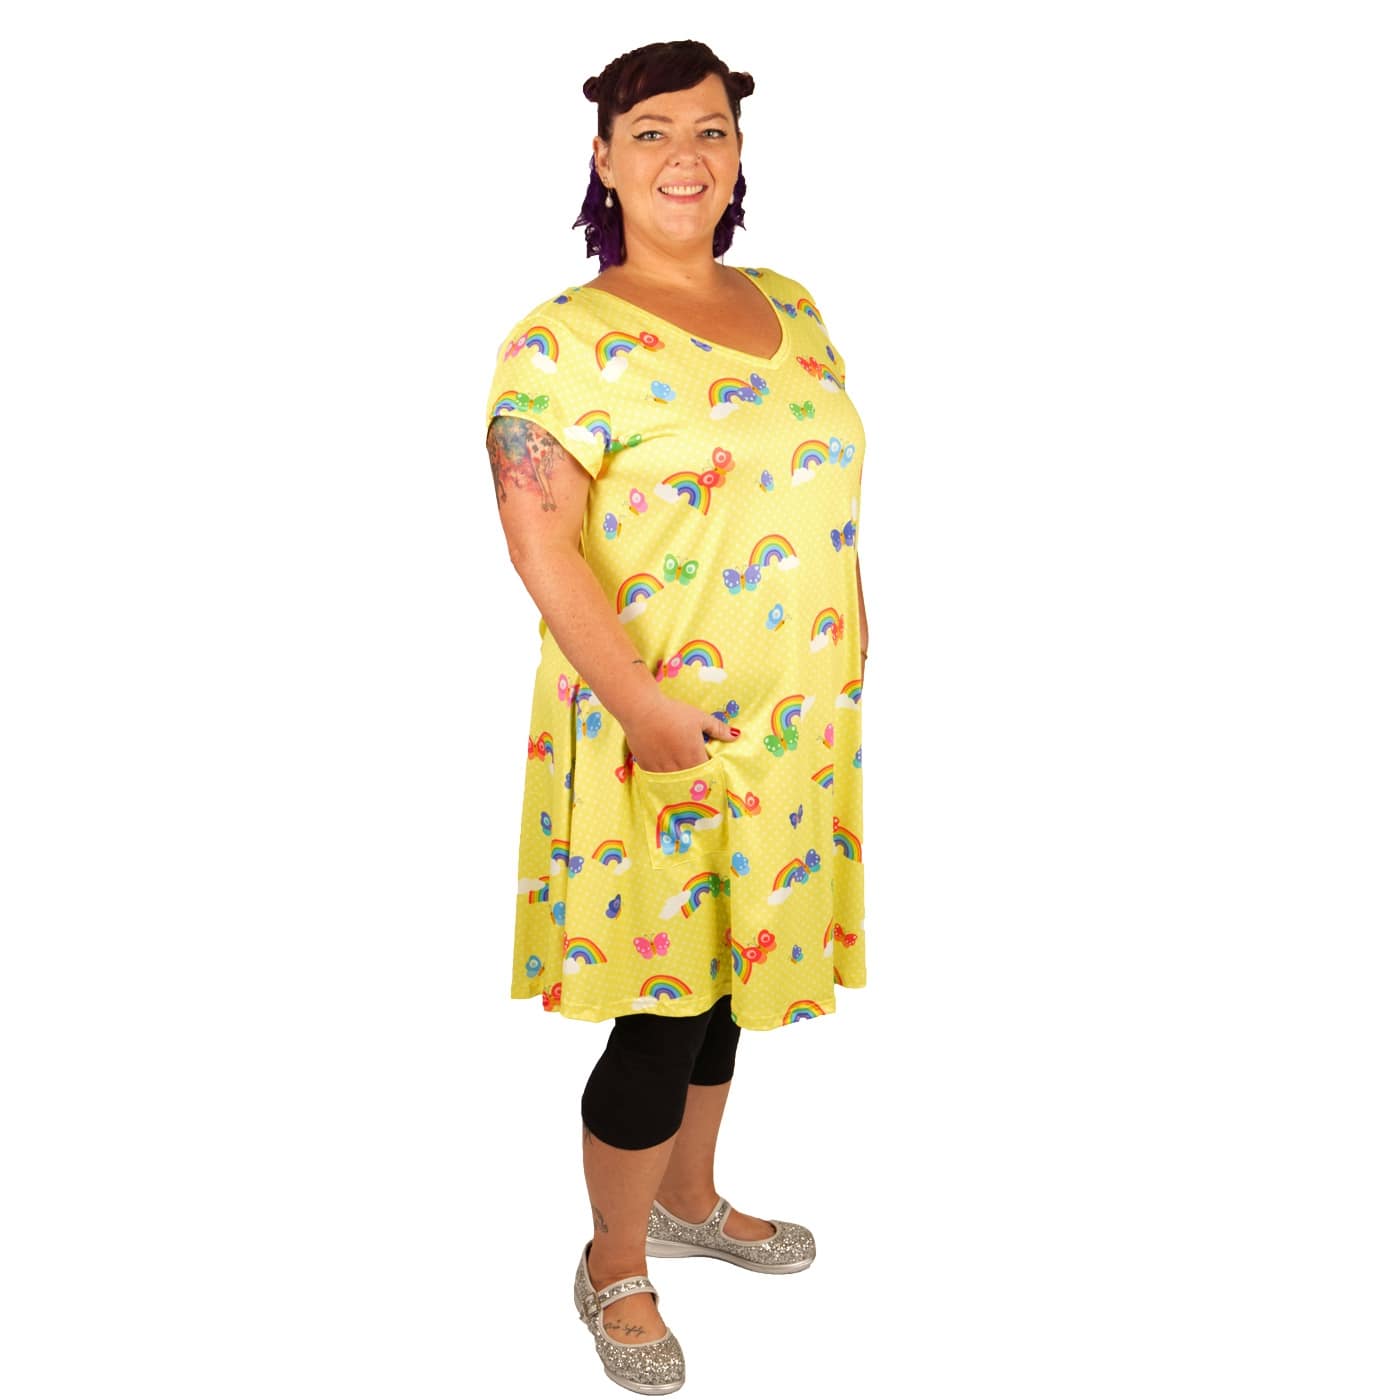 Sunshine Tunic Dress by RainbowsAndFairies.com.au (Yellow Polka Dot - Butterflies - Rainbows - Clouds - Vintage Inspired - Kitsch - Dress With Pockets) - SKU: CL_TUNDR_SUNSH_ORG - Pic-04